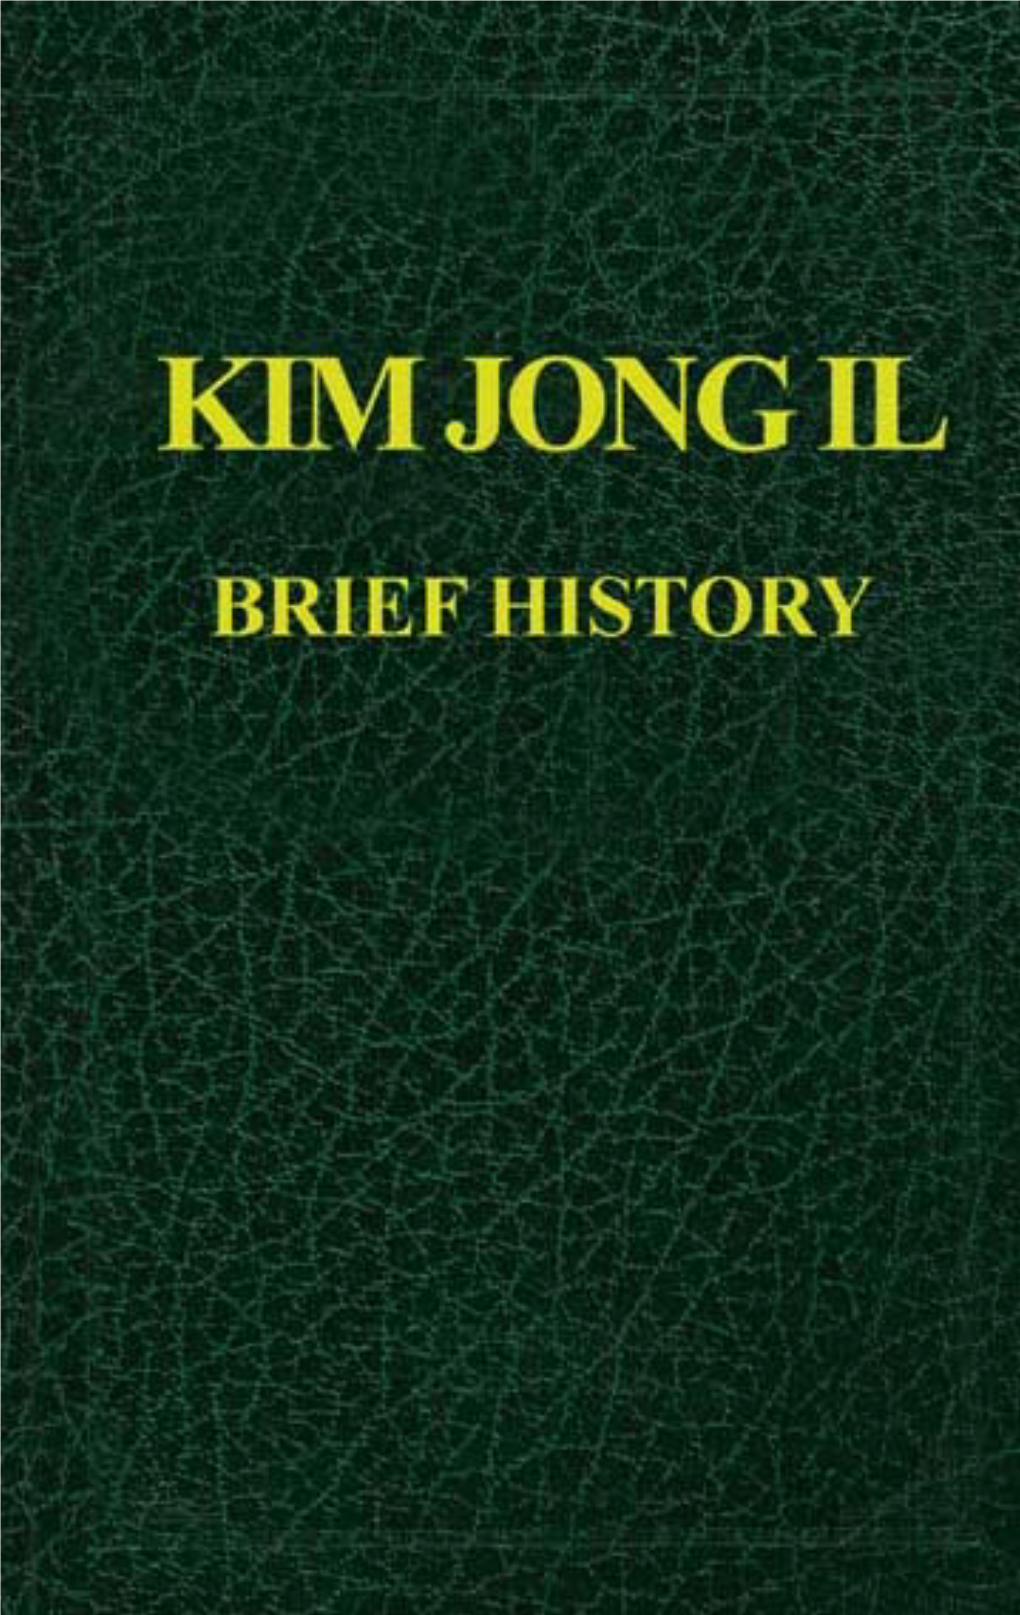 Kim Jong Il, Brief History